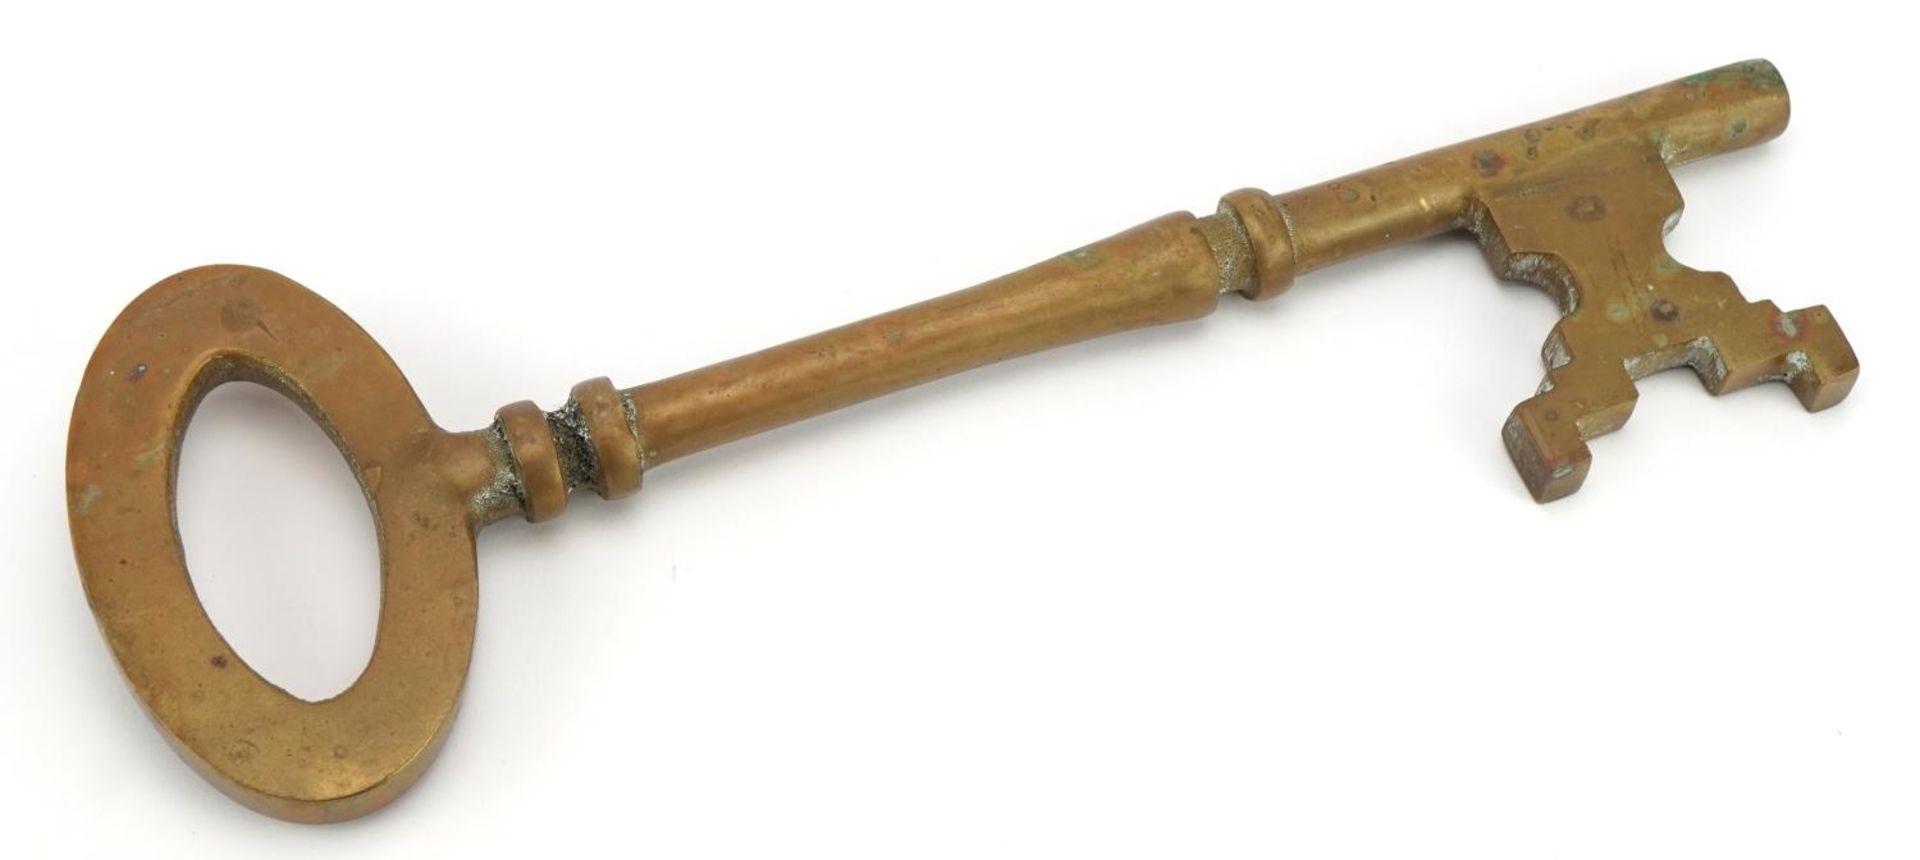 Oversized brass key, 36cm in length - Image 2 of 2